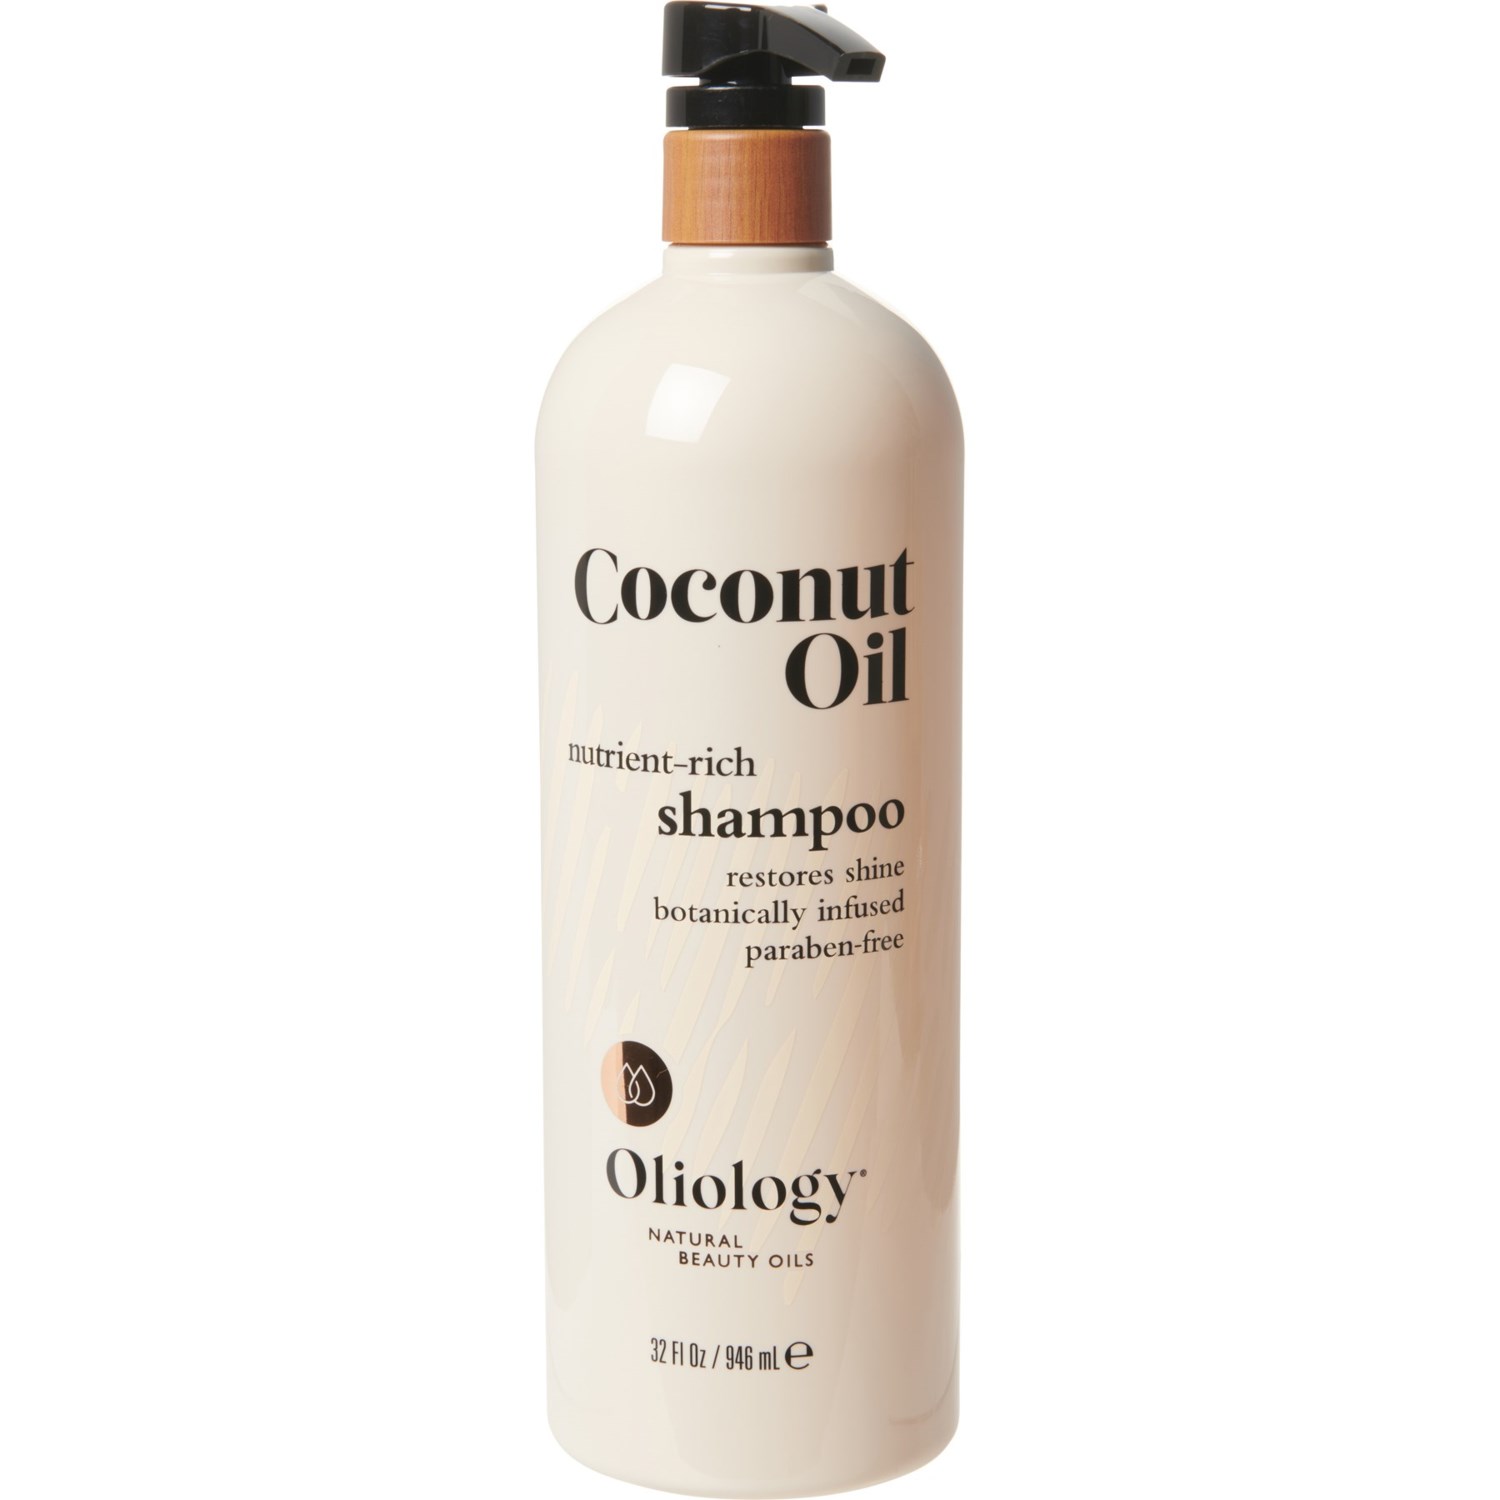 Oliology Coconut Oil Shampoo - 32 oz. - Save 30%